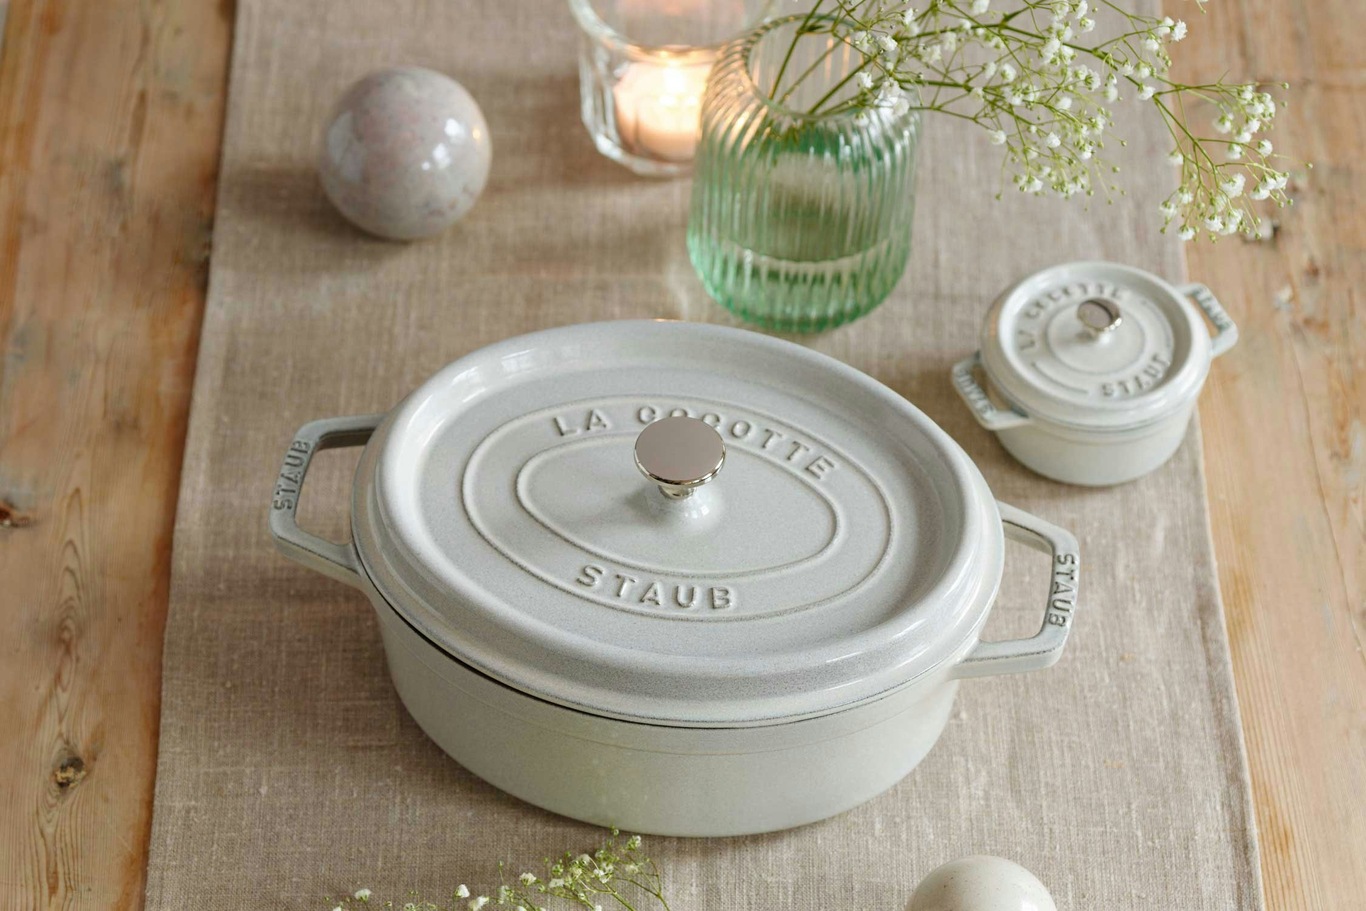 https://royaldesign.com/image/2/staub-oval-gryta-37-cm-white-truffle-8-l-2?w=800&quality=80